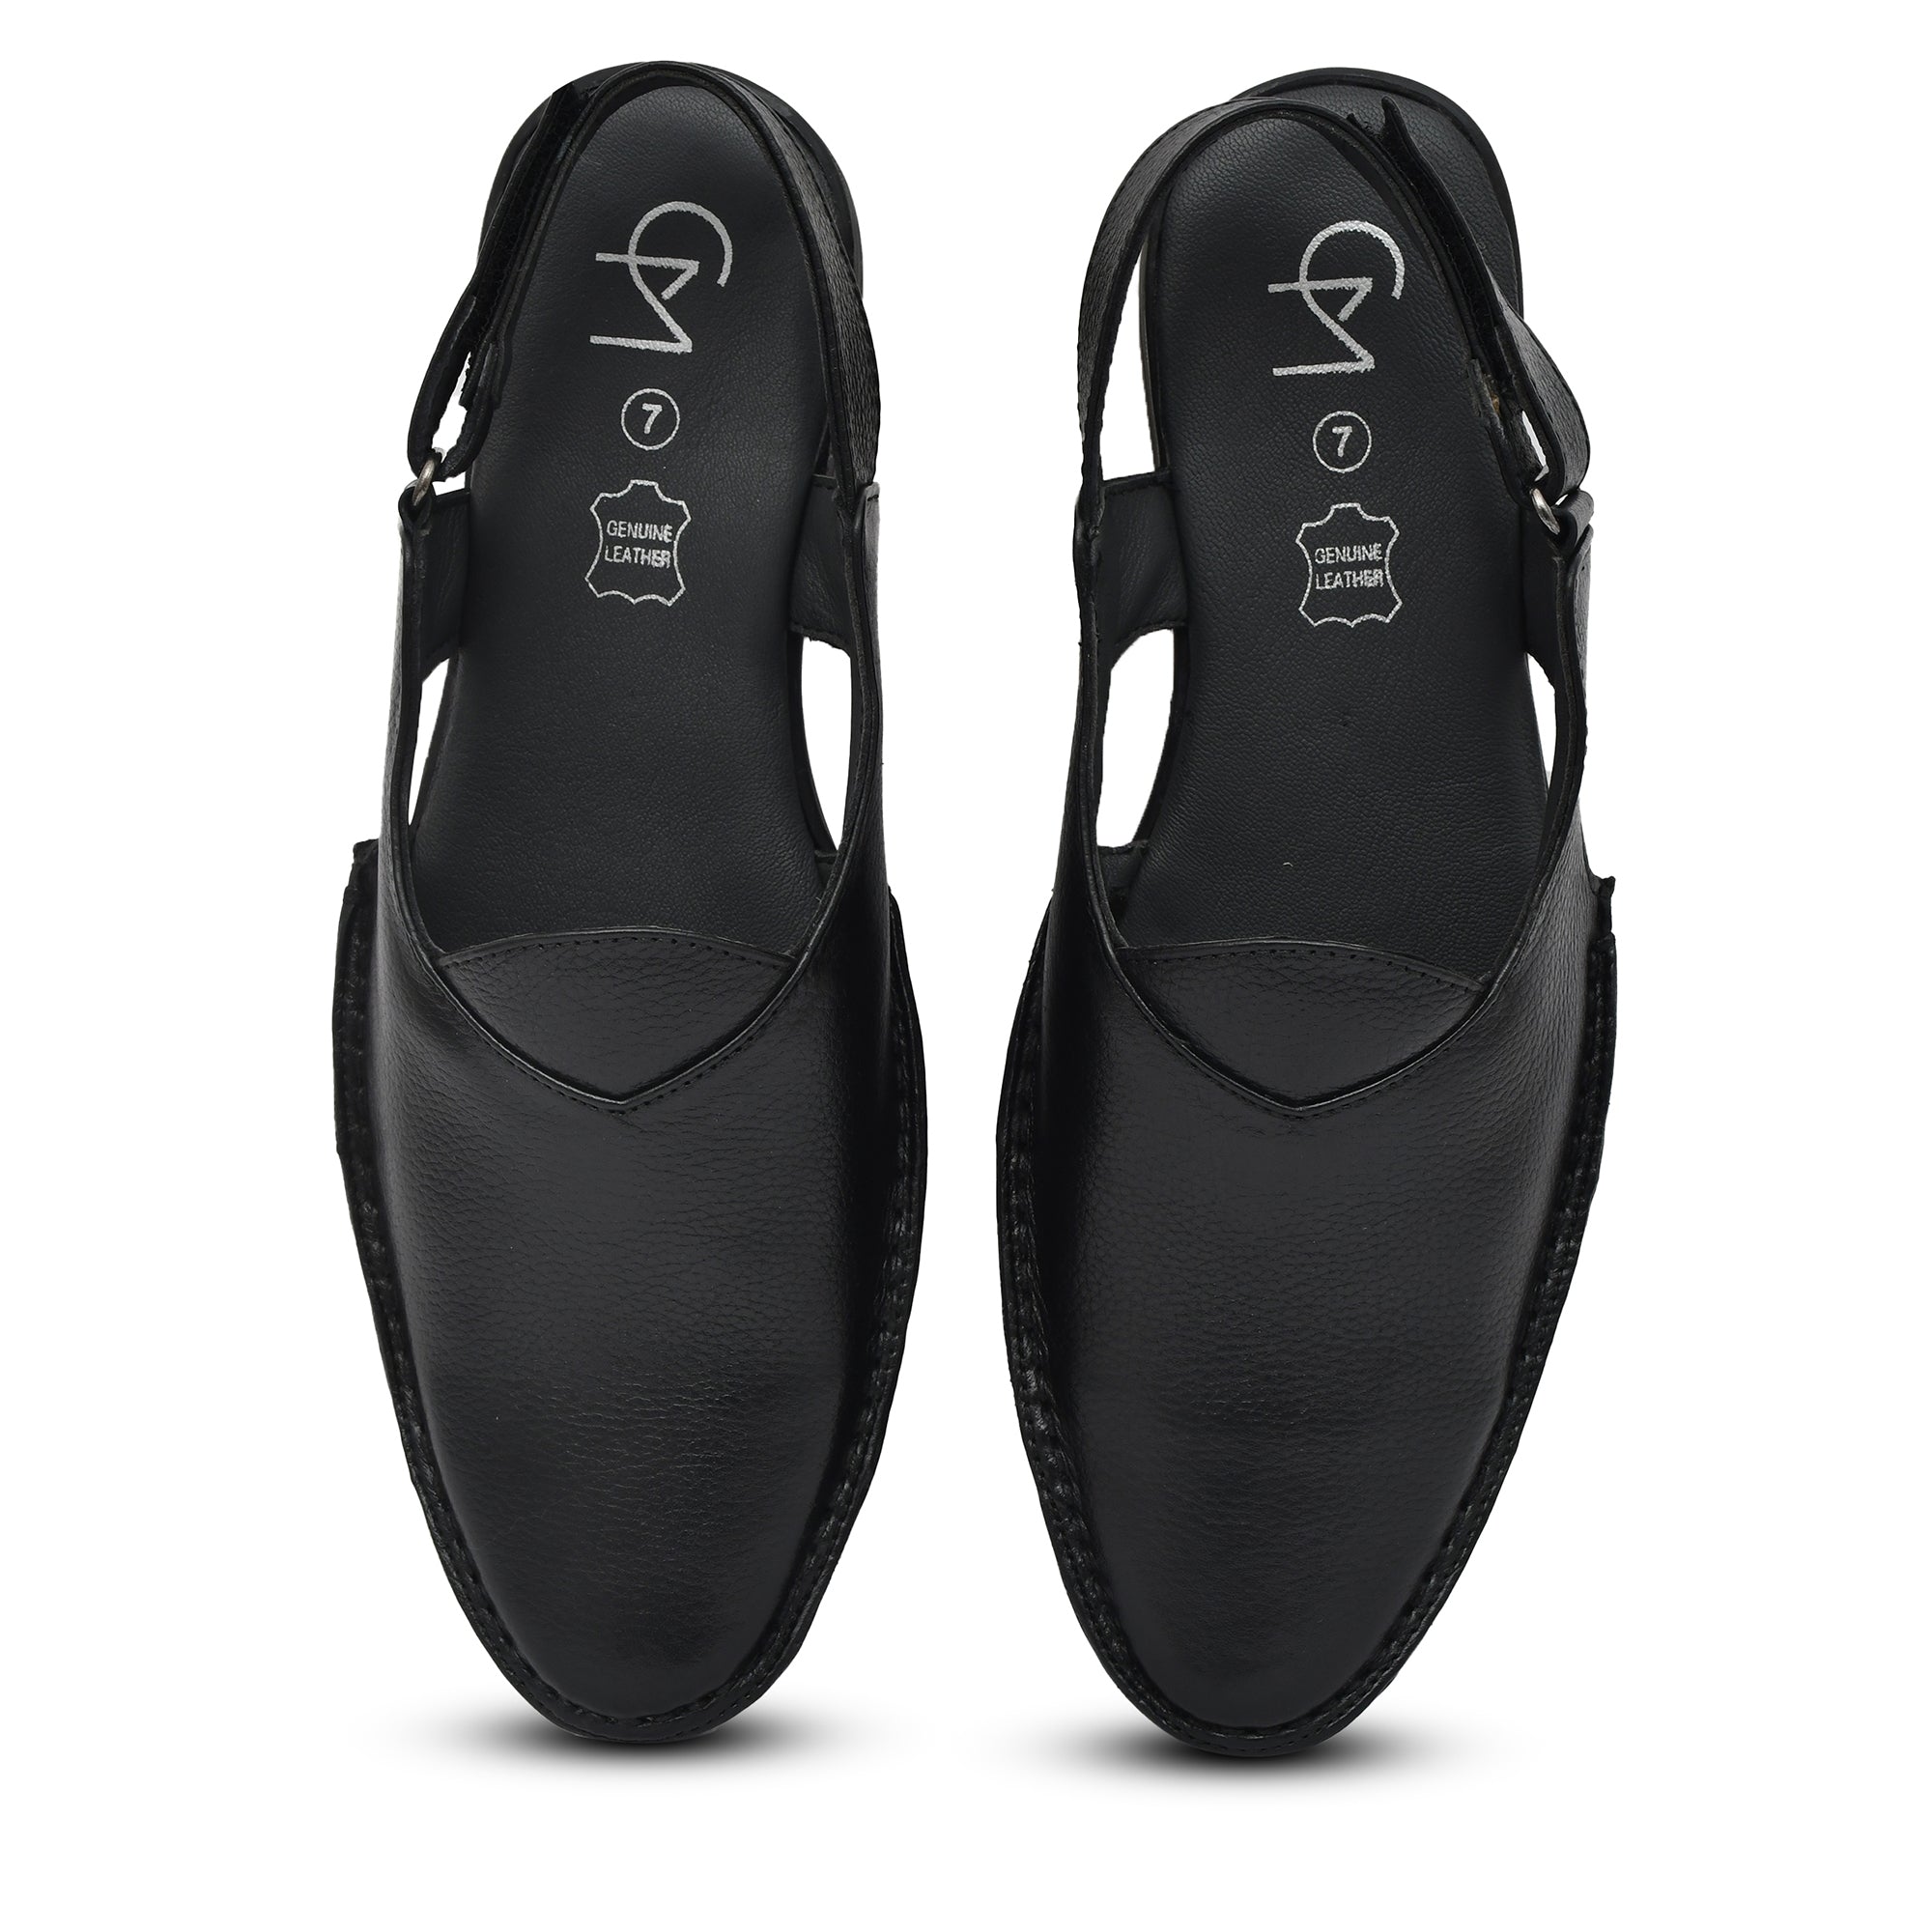 CM Leather Sandals for men's